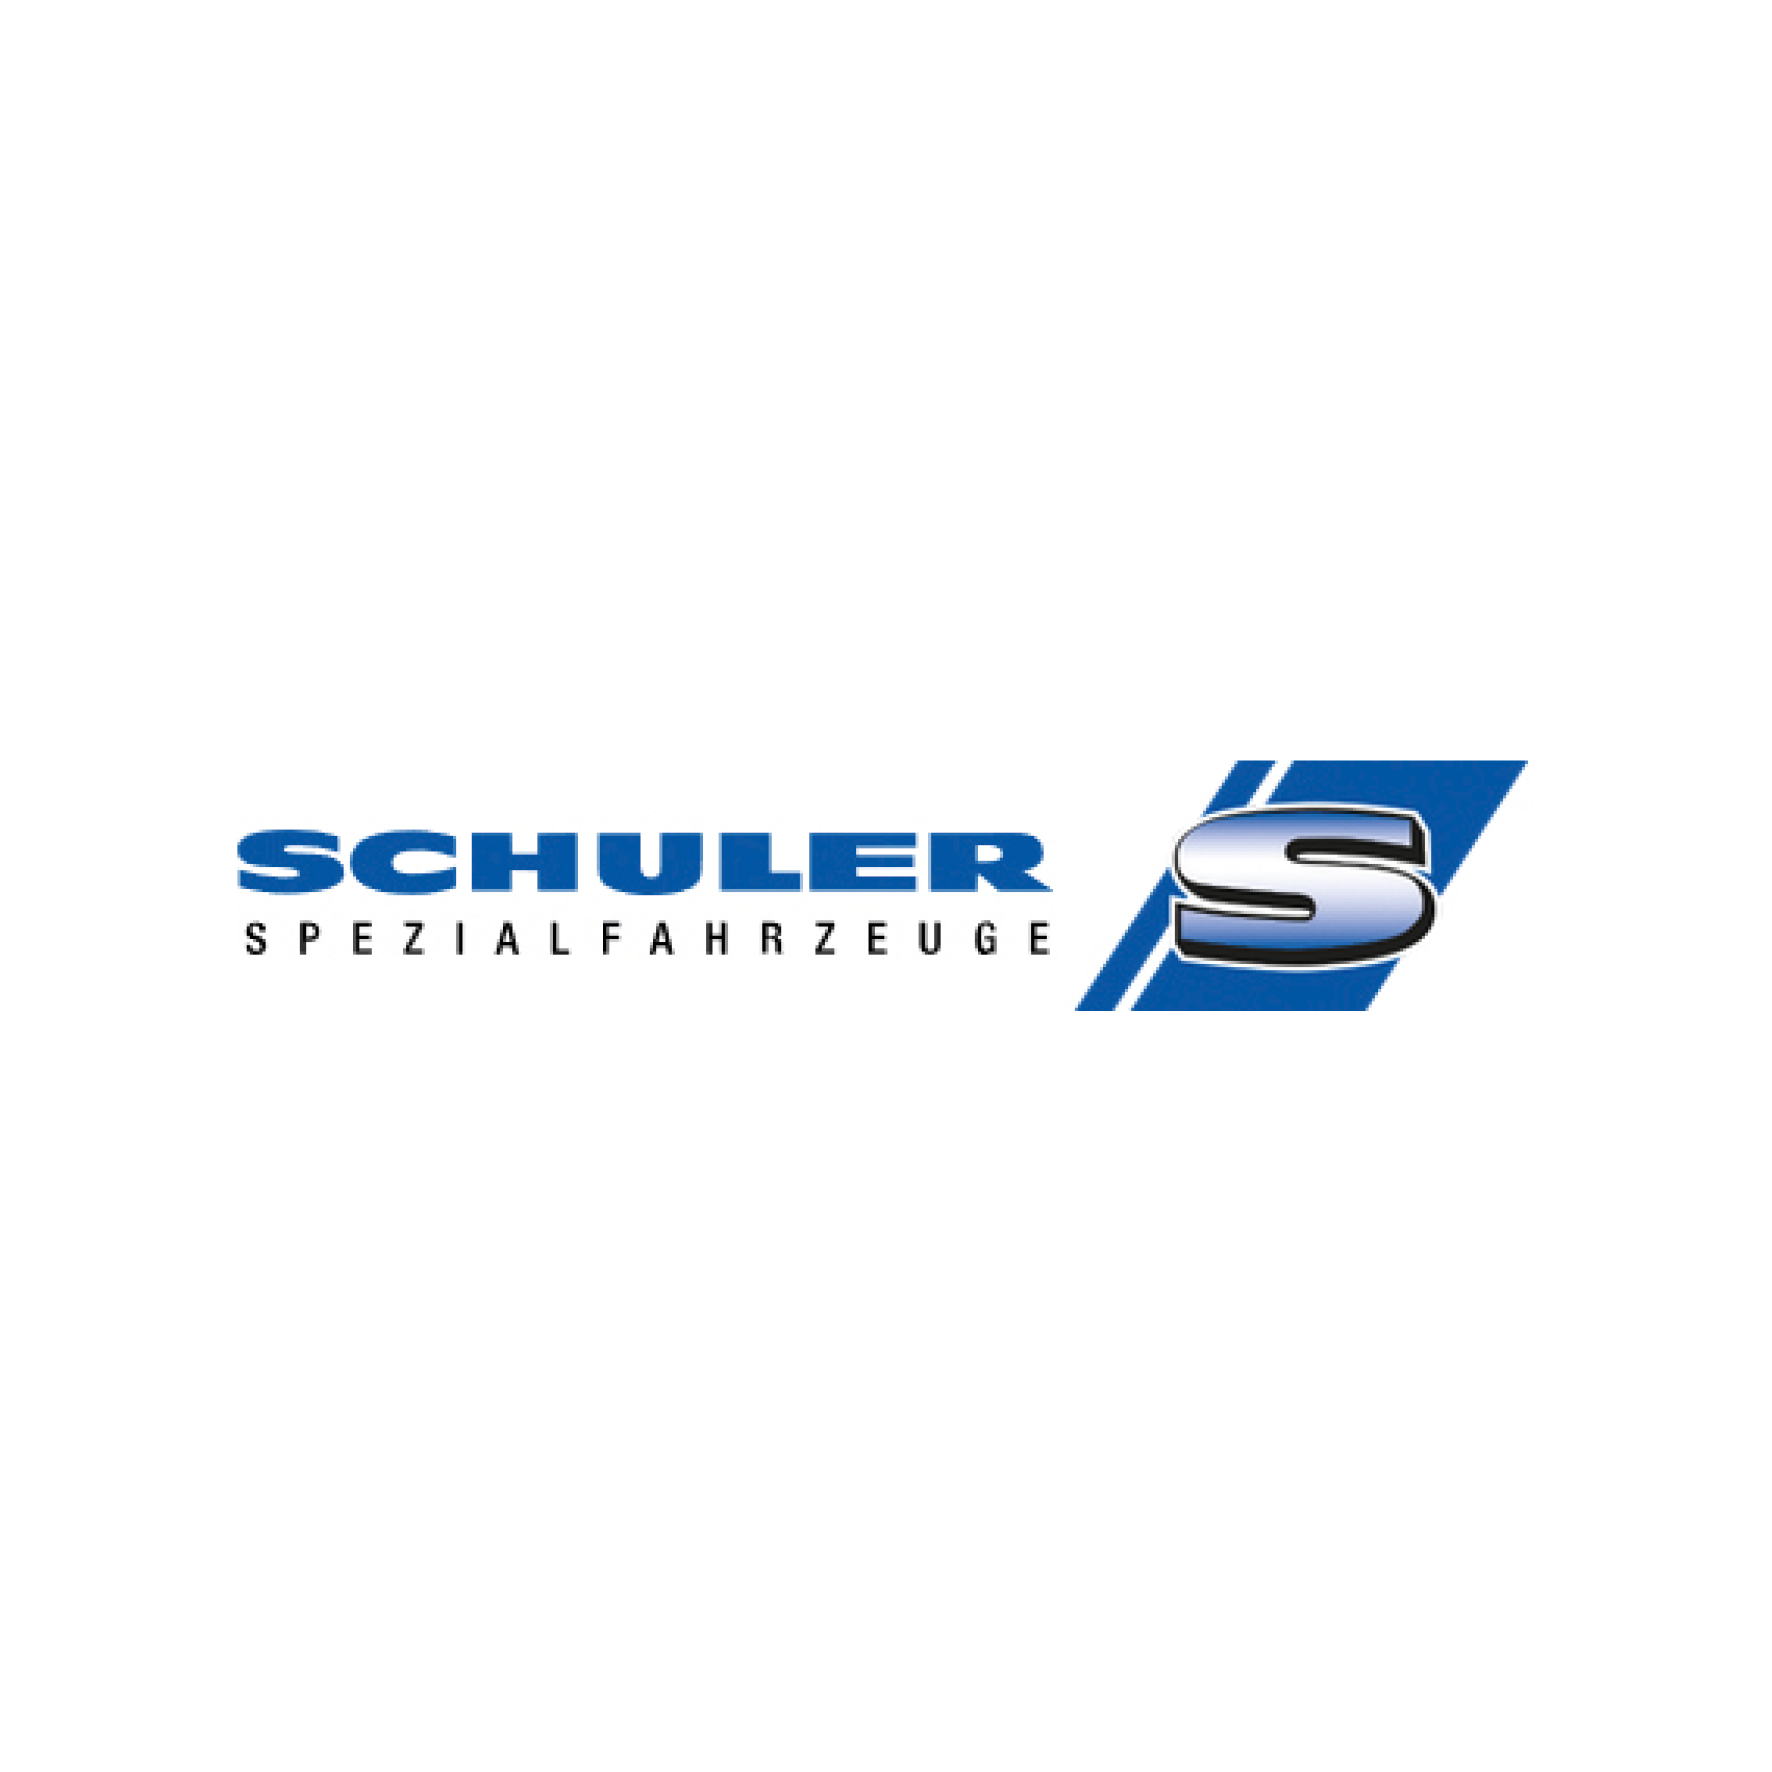 SCHULER Spezialfahrzeuge GmbH